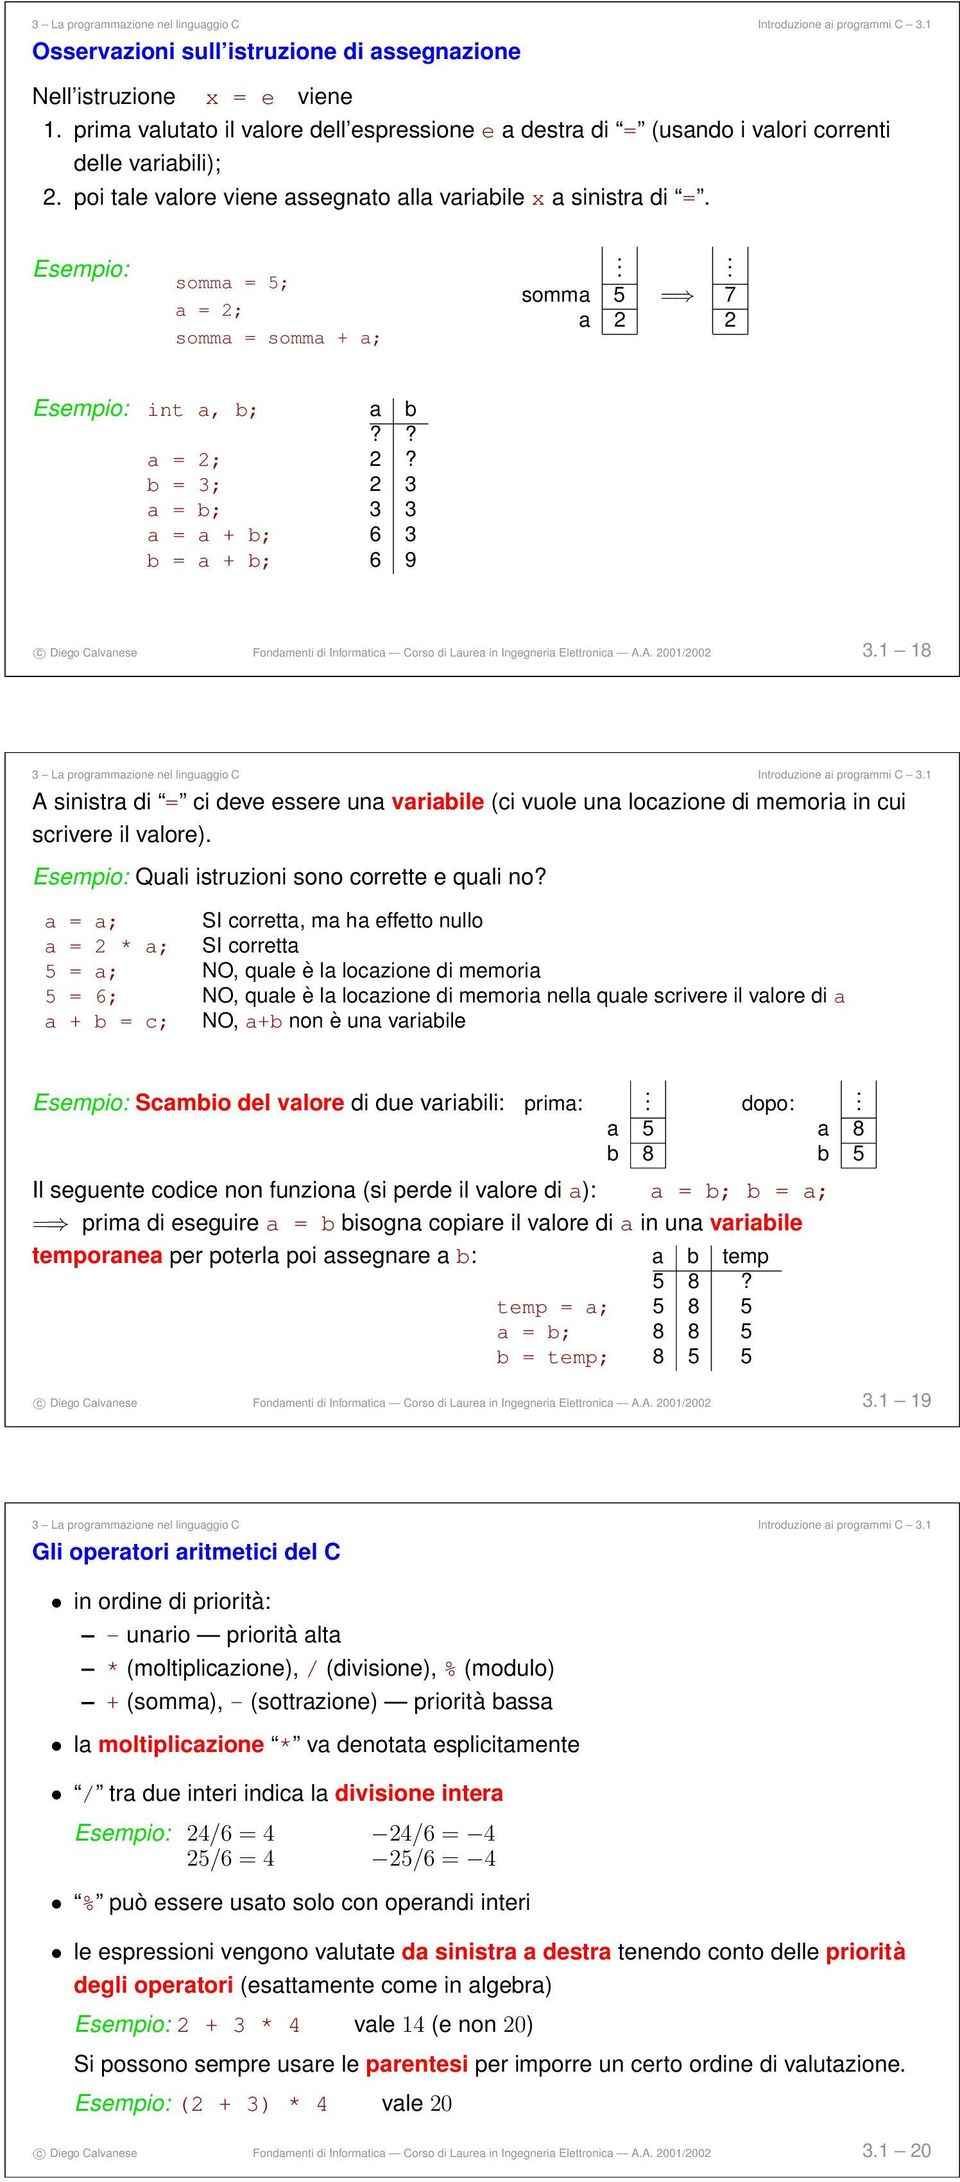 b = 3; 2 3 a = b; 3 3 a = a + b; 6 3 b = a + b; 6 9 c Diego Calvanese Fondamenti di Informatica Corso di Laurea in Ingegneria Elettronica A.A. 2001/2002 3.